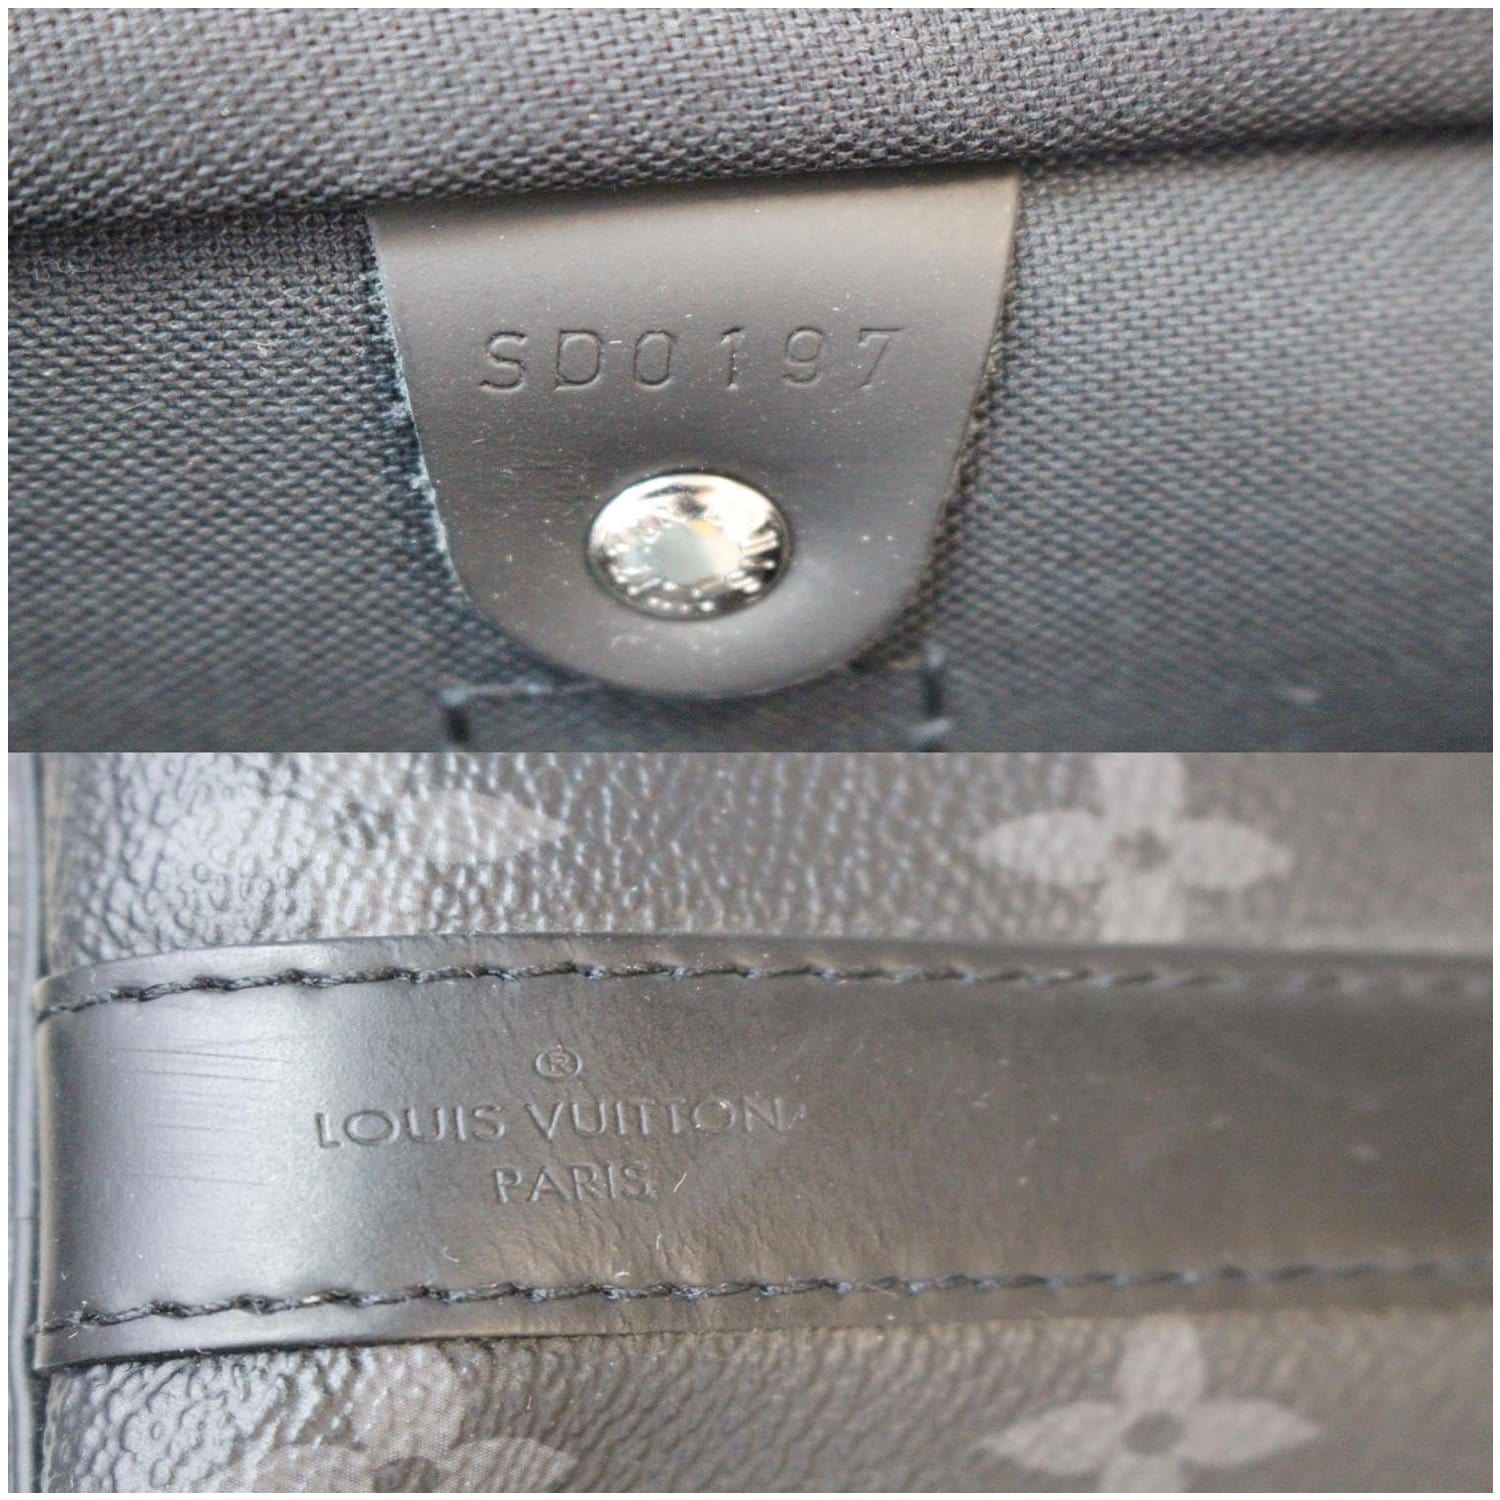 Louis Vuitton Black and Blue Limited Edition Dubai LV Cup Canvas Waterproof Keepall Bandouliere 55 Black Hardware (Very Good), Handbag